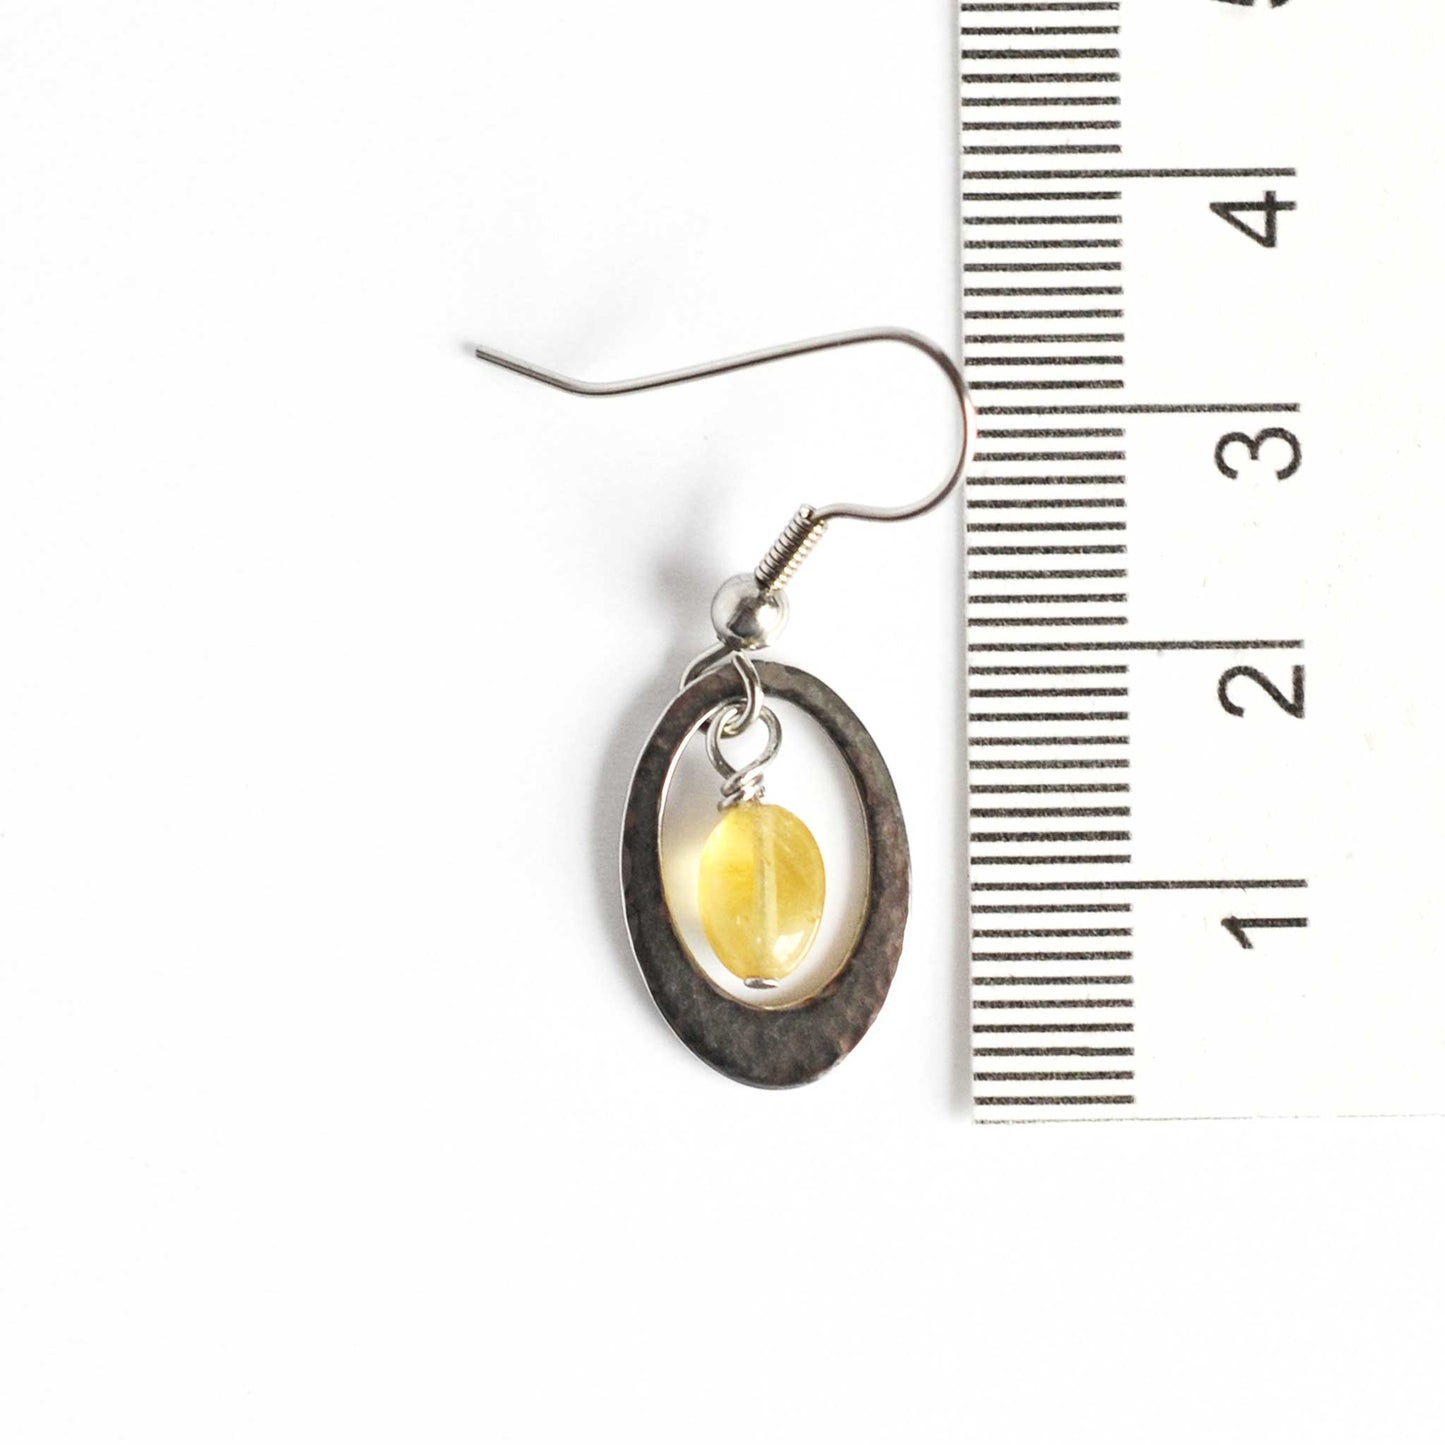 35mm long Citrine gemstone oval drop earrings next to ruler.